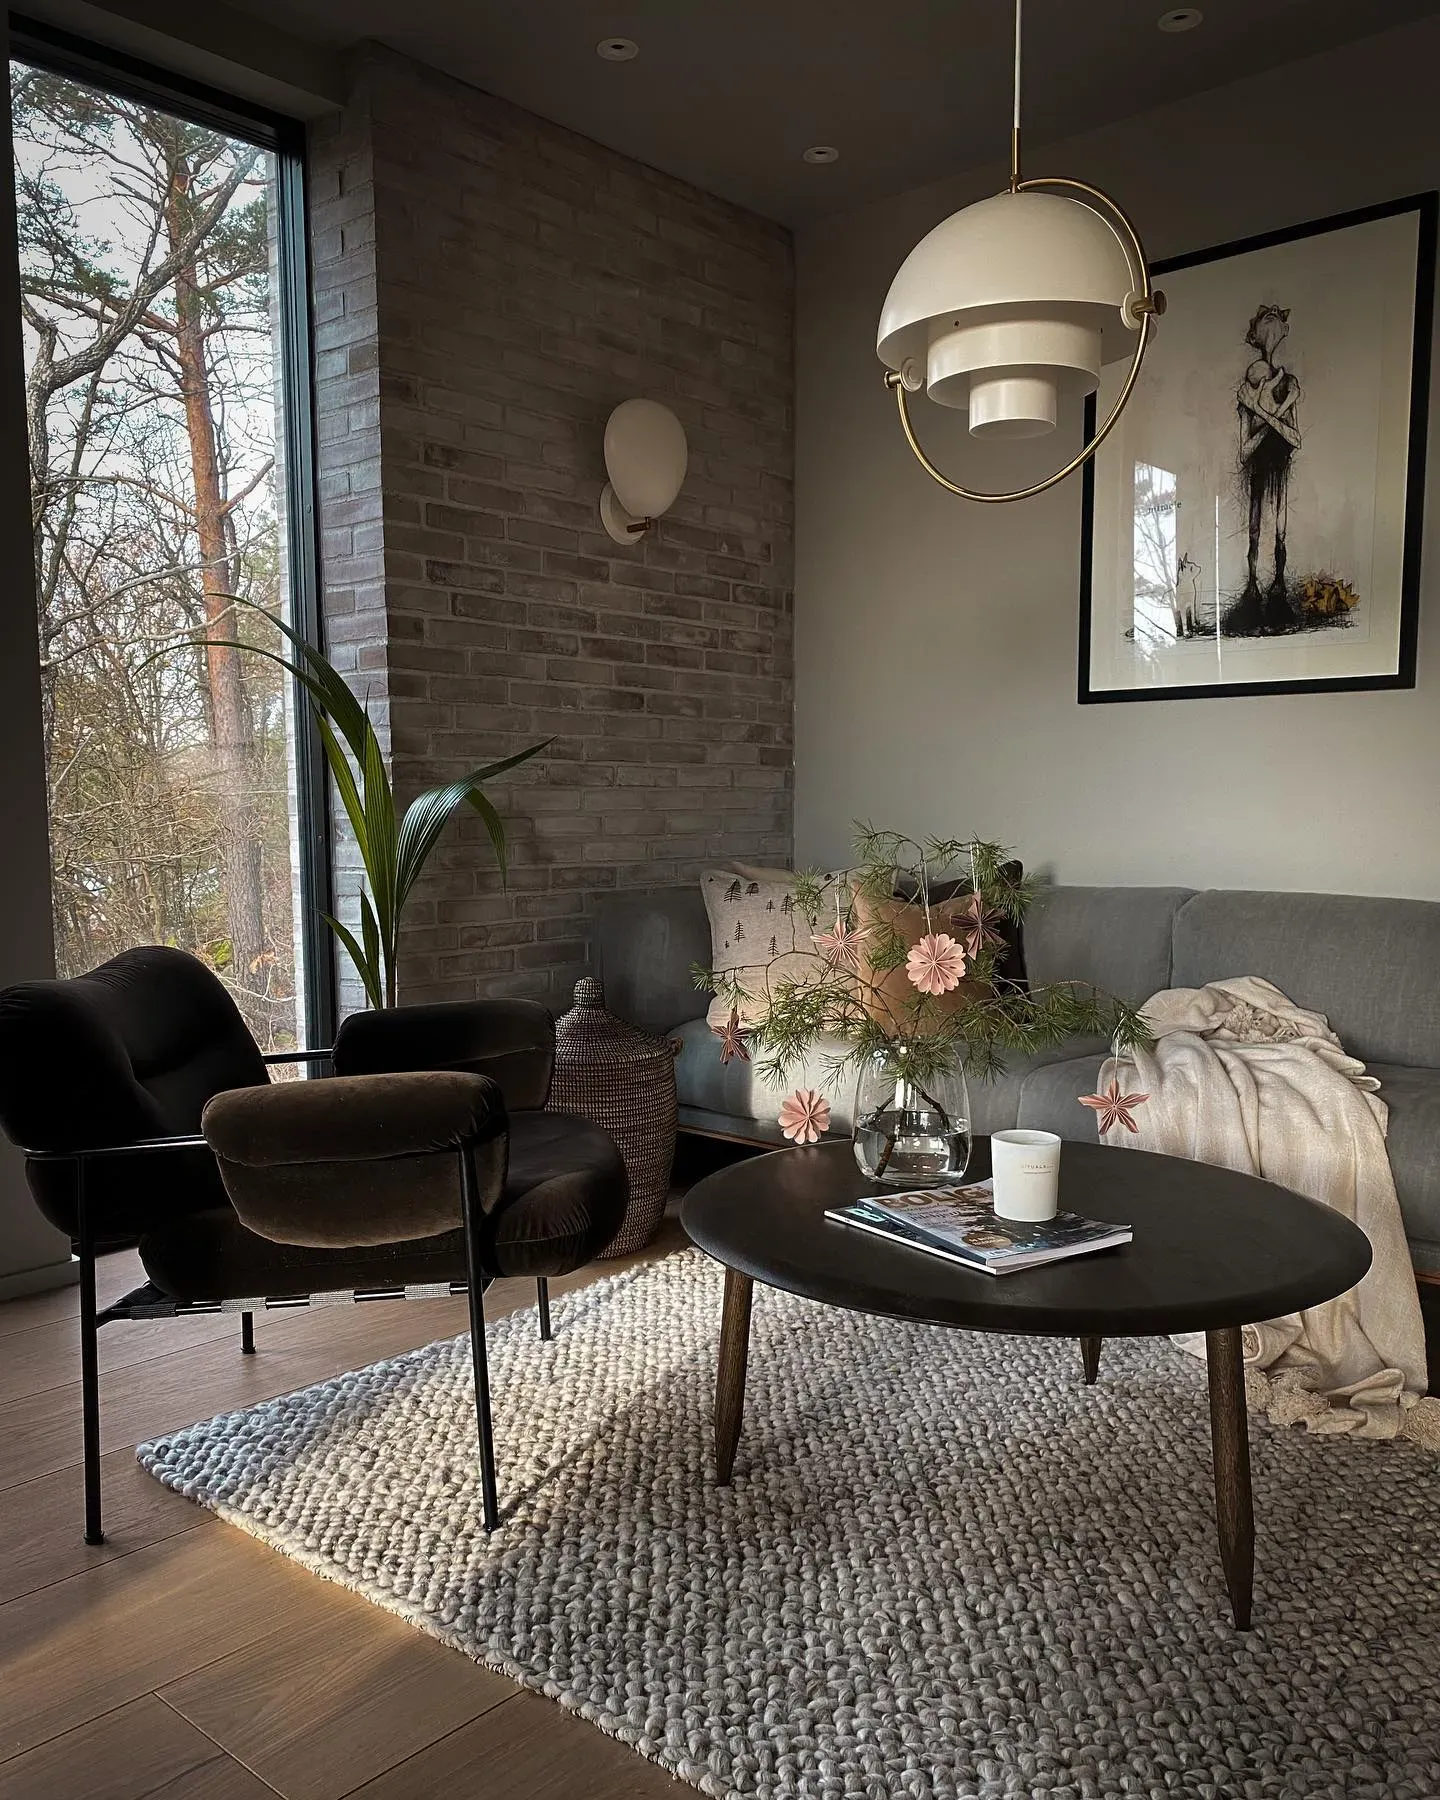 Jotun Chino cozy living room inspiration